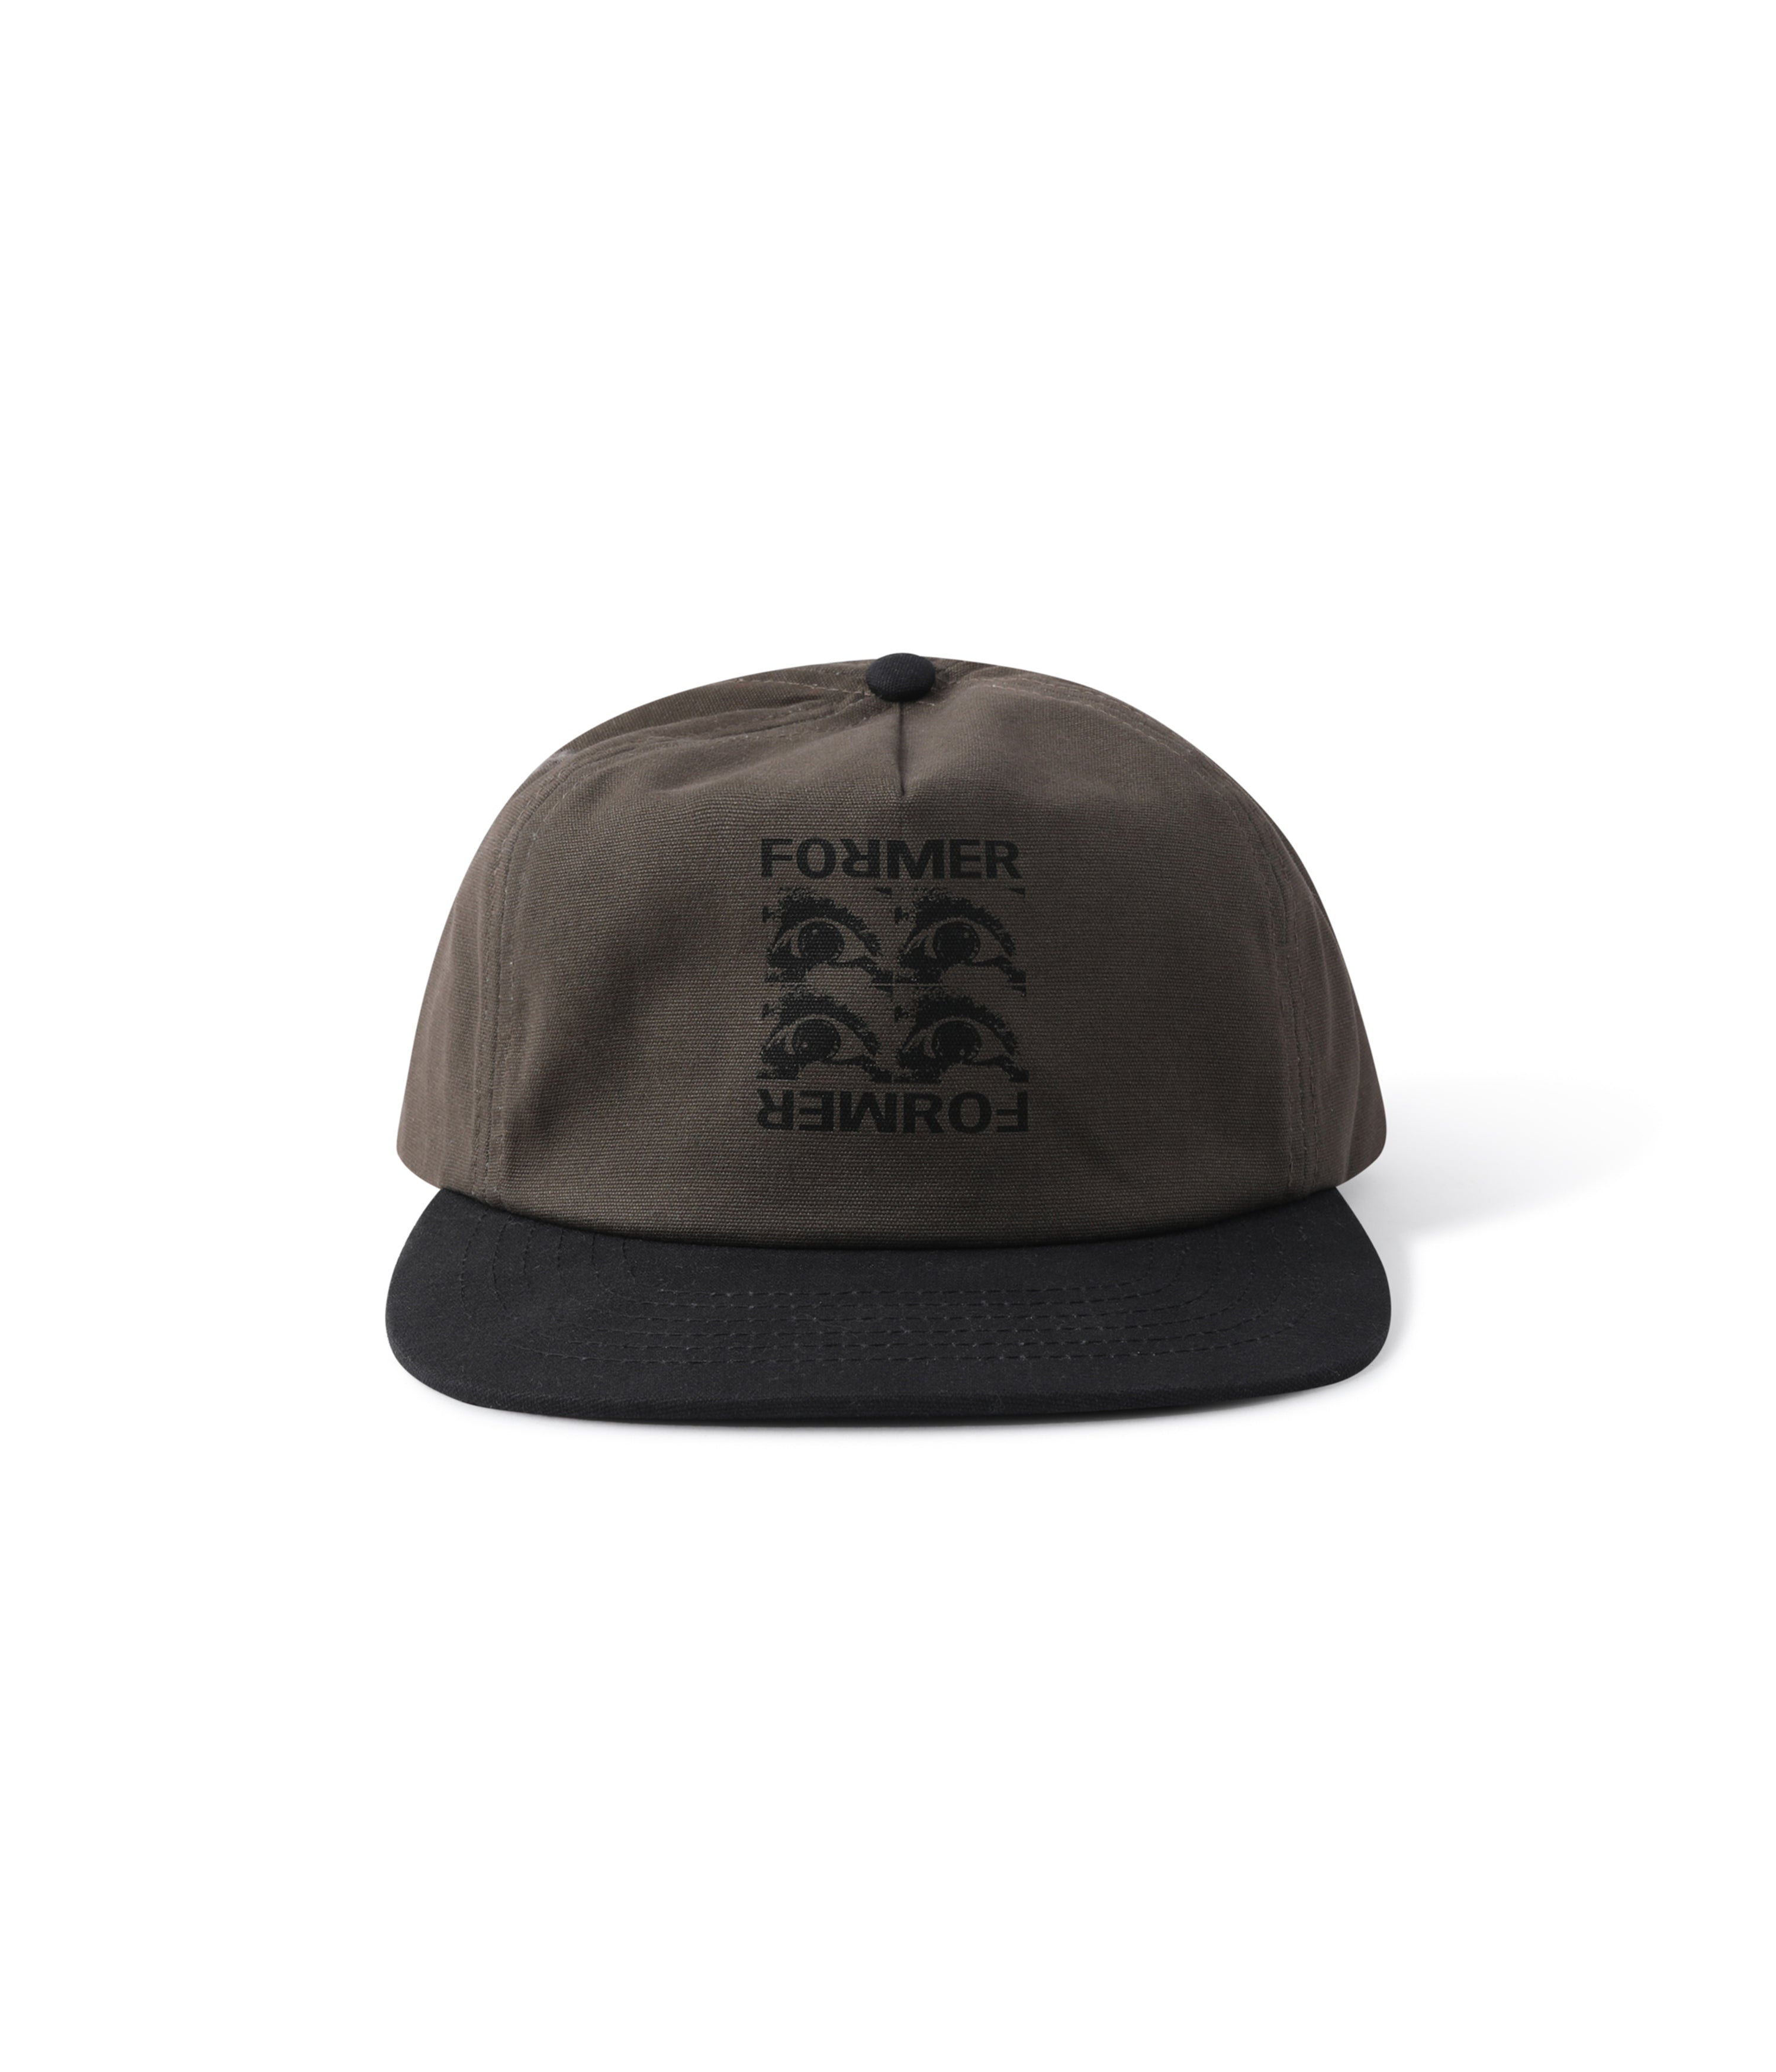 Former Merchandise - REPLICA CAP Army - Army